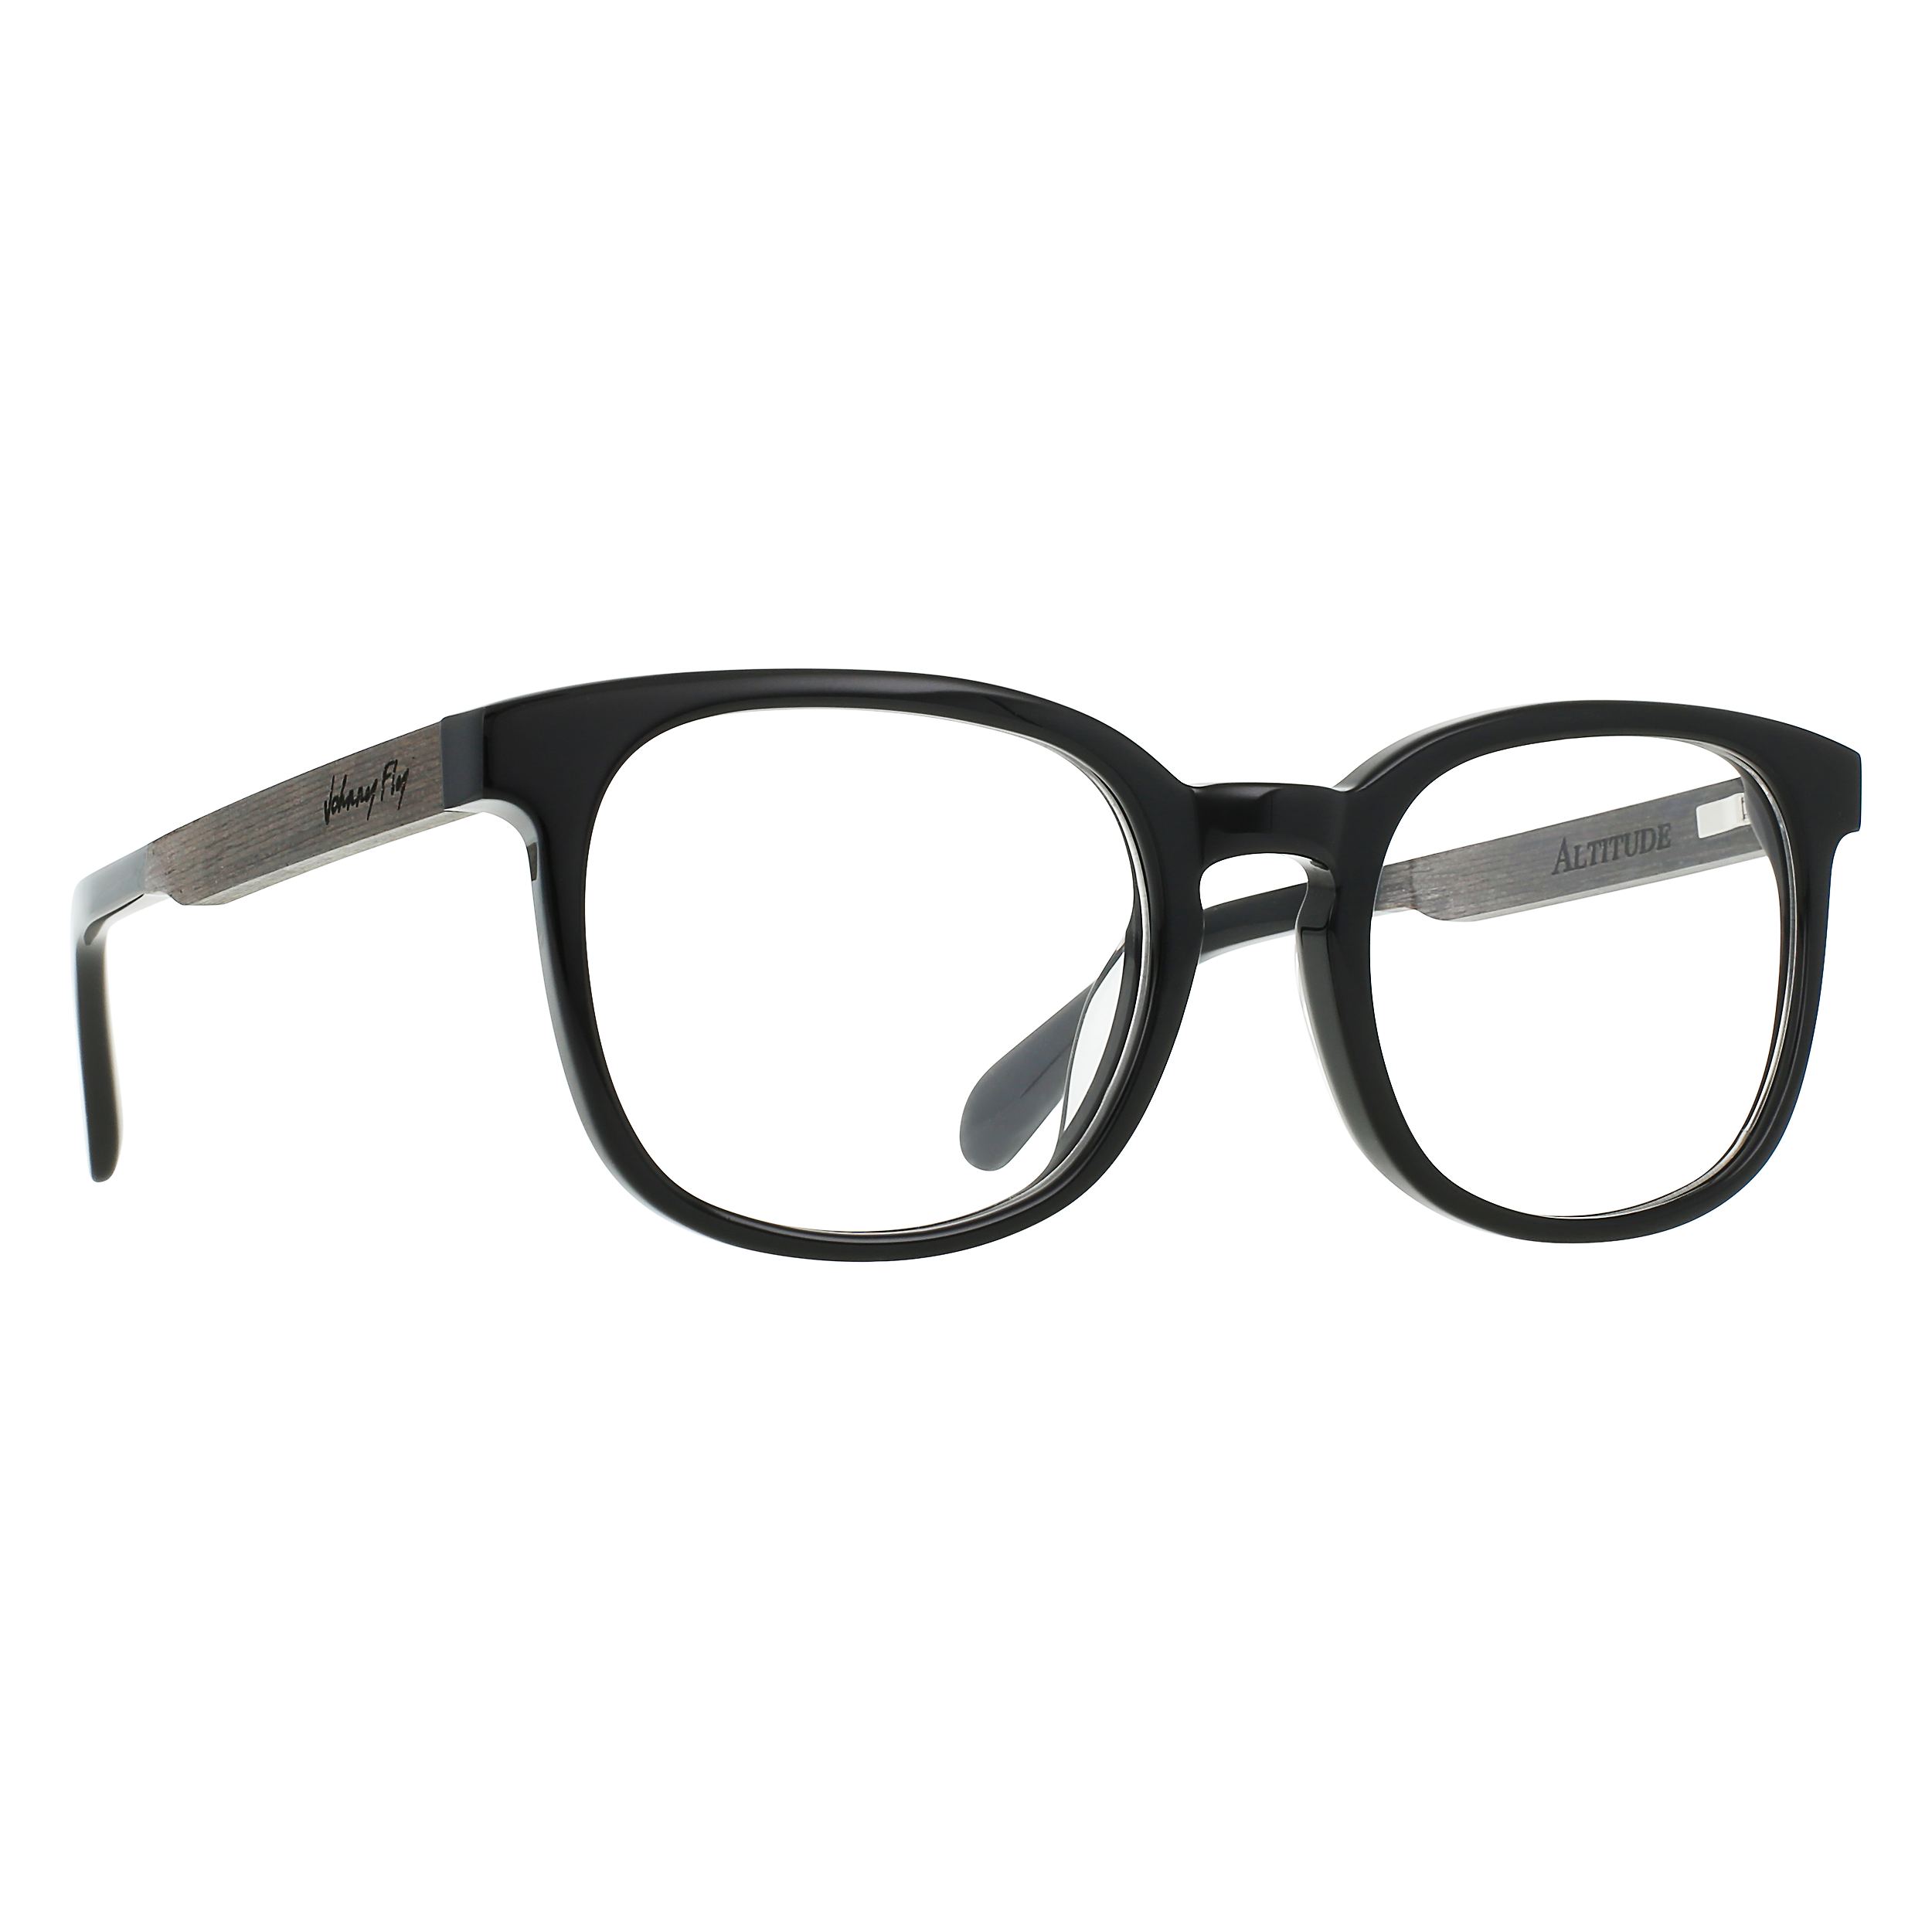 ALTITUDE BLUGARD - Gloss Black - Blue Light Glasses - Johnny Fly Eyewear 